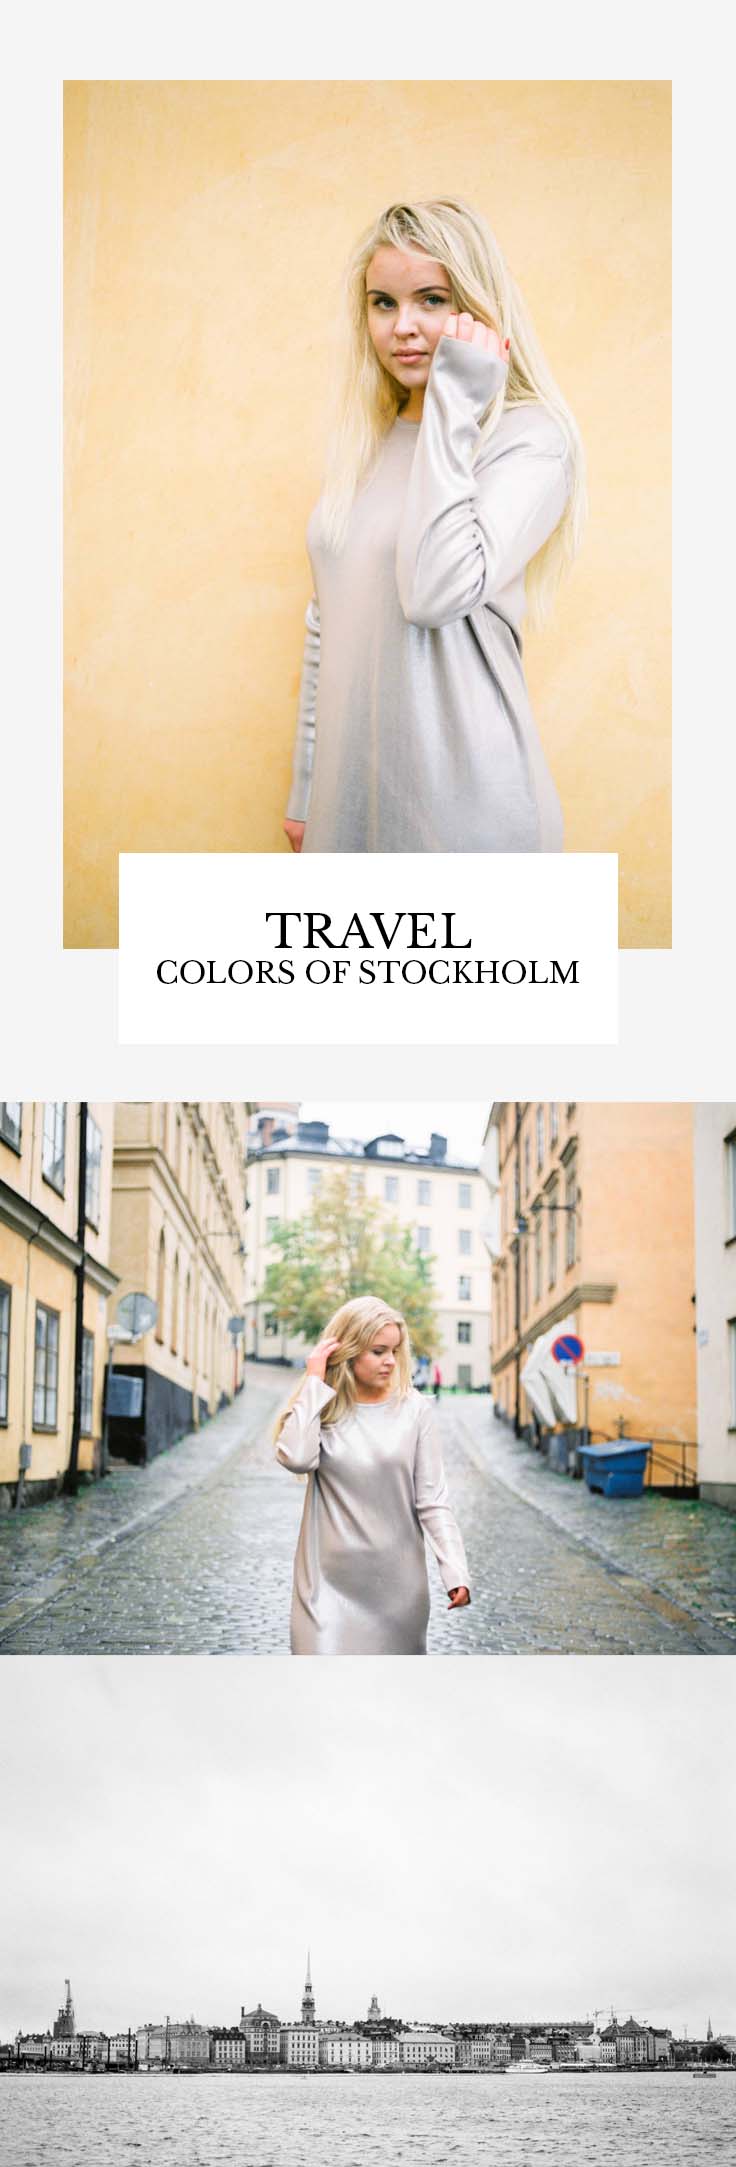 Travel - Streets of Stockholm